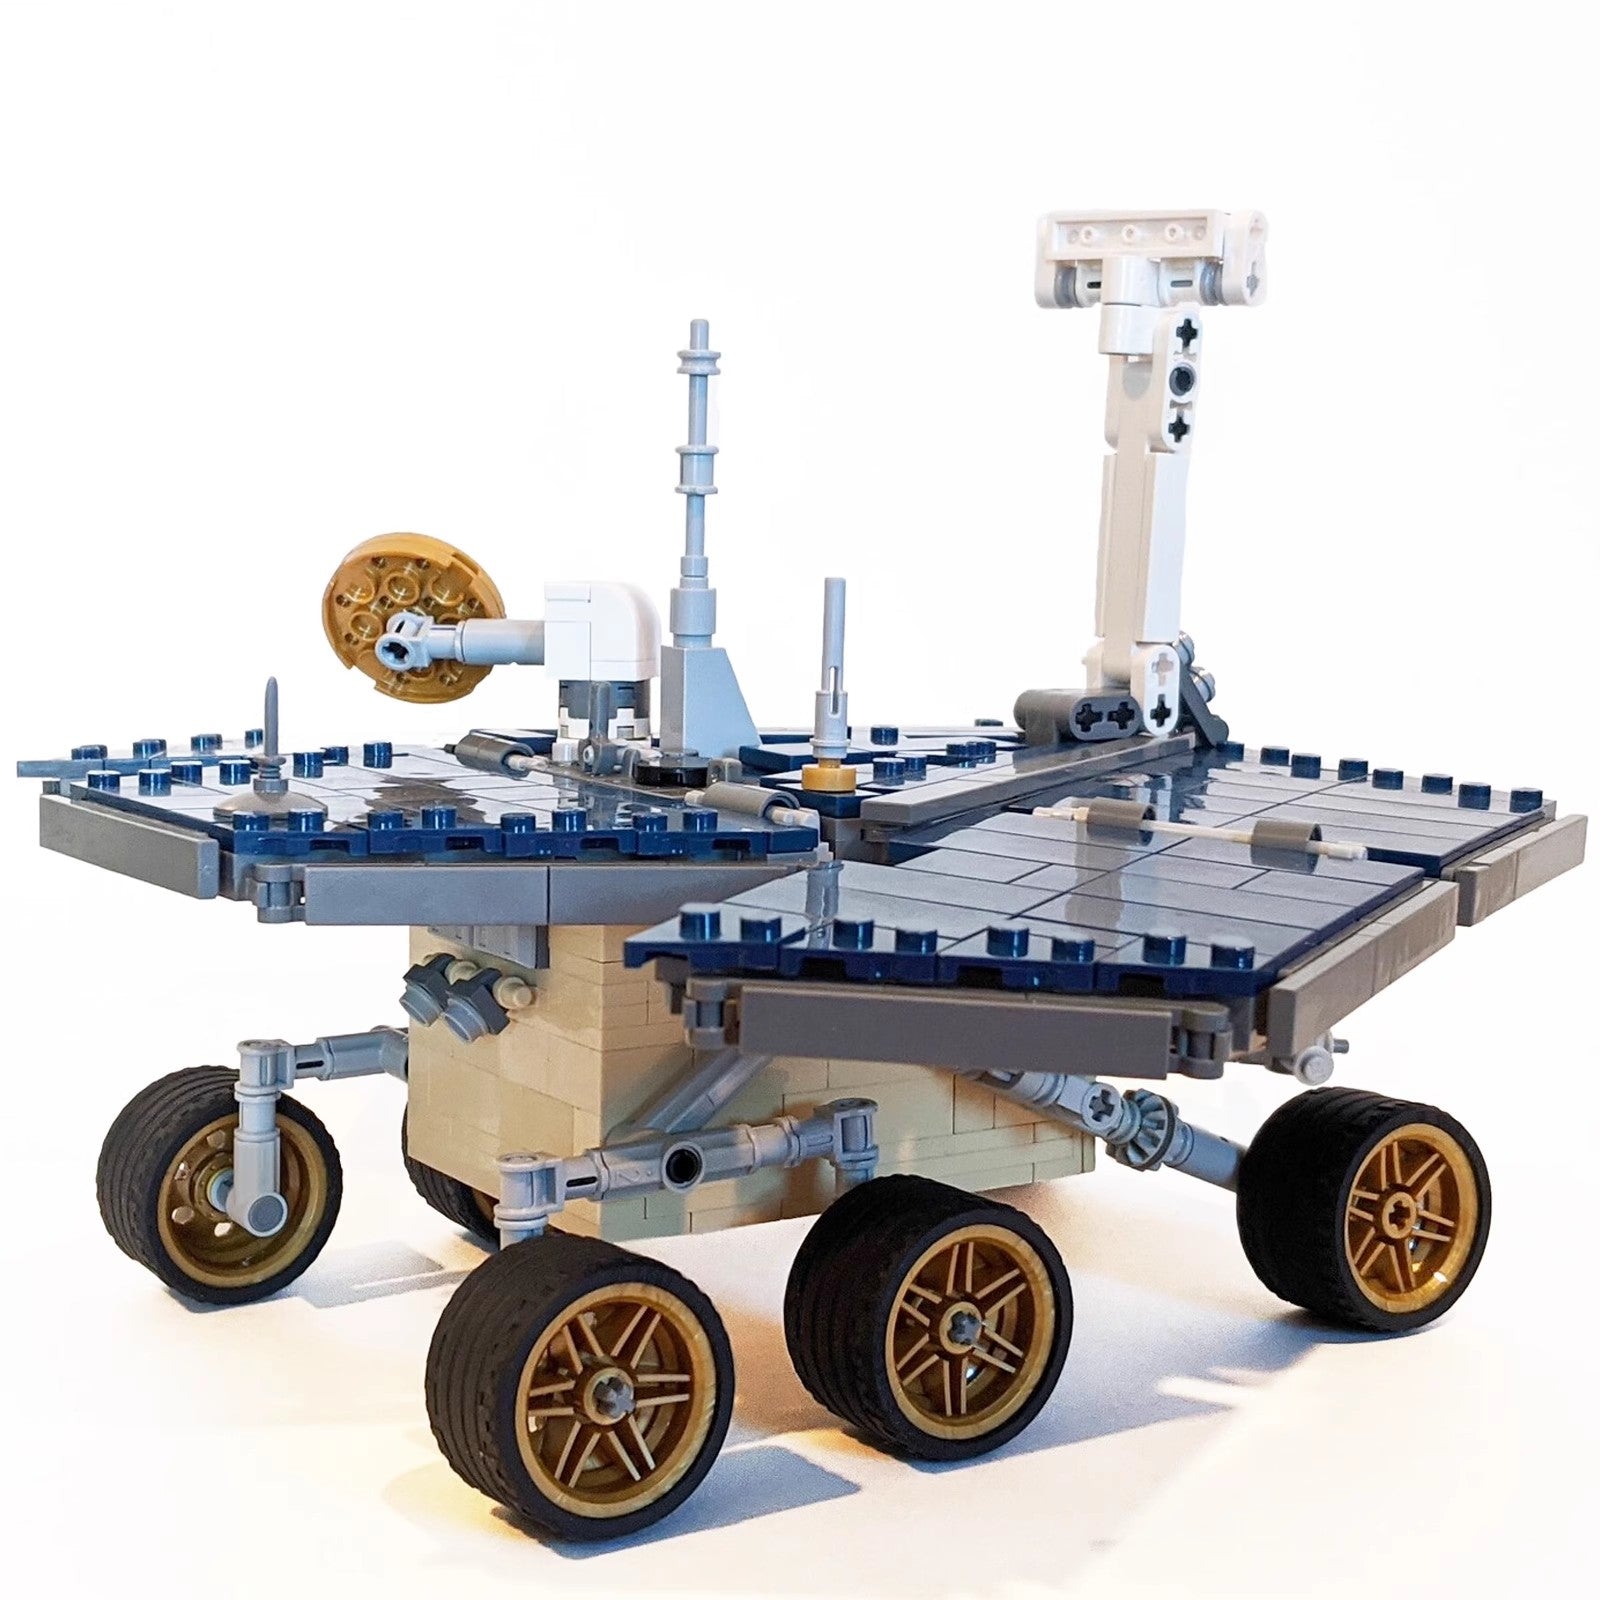 MOC-39989 [UCS] Opportunity/Spirit Mars Exploration Rover